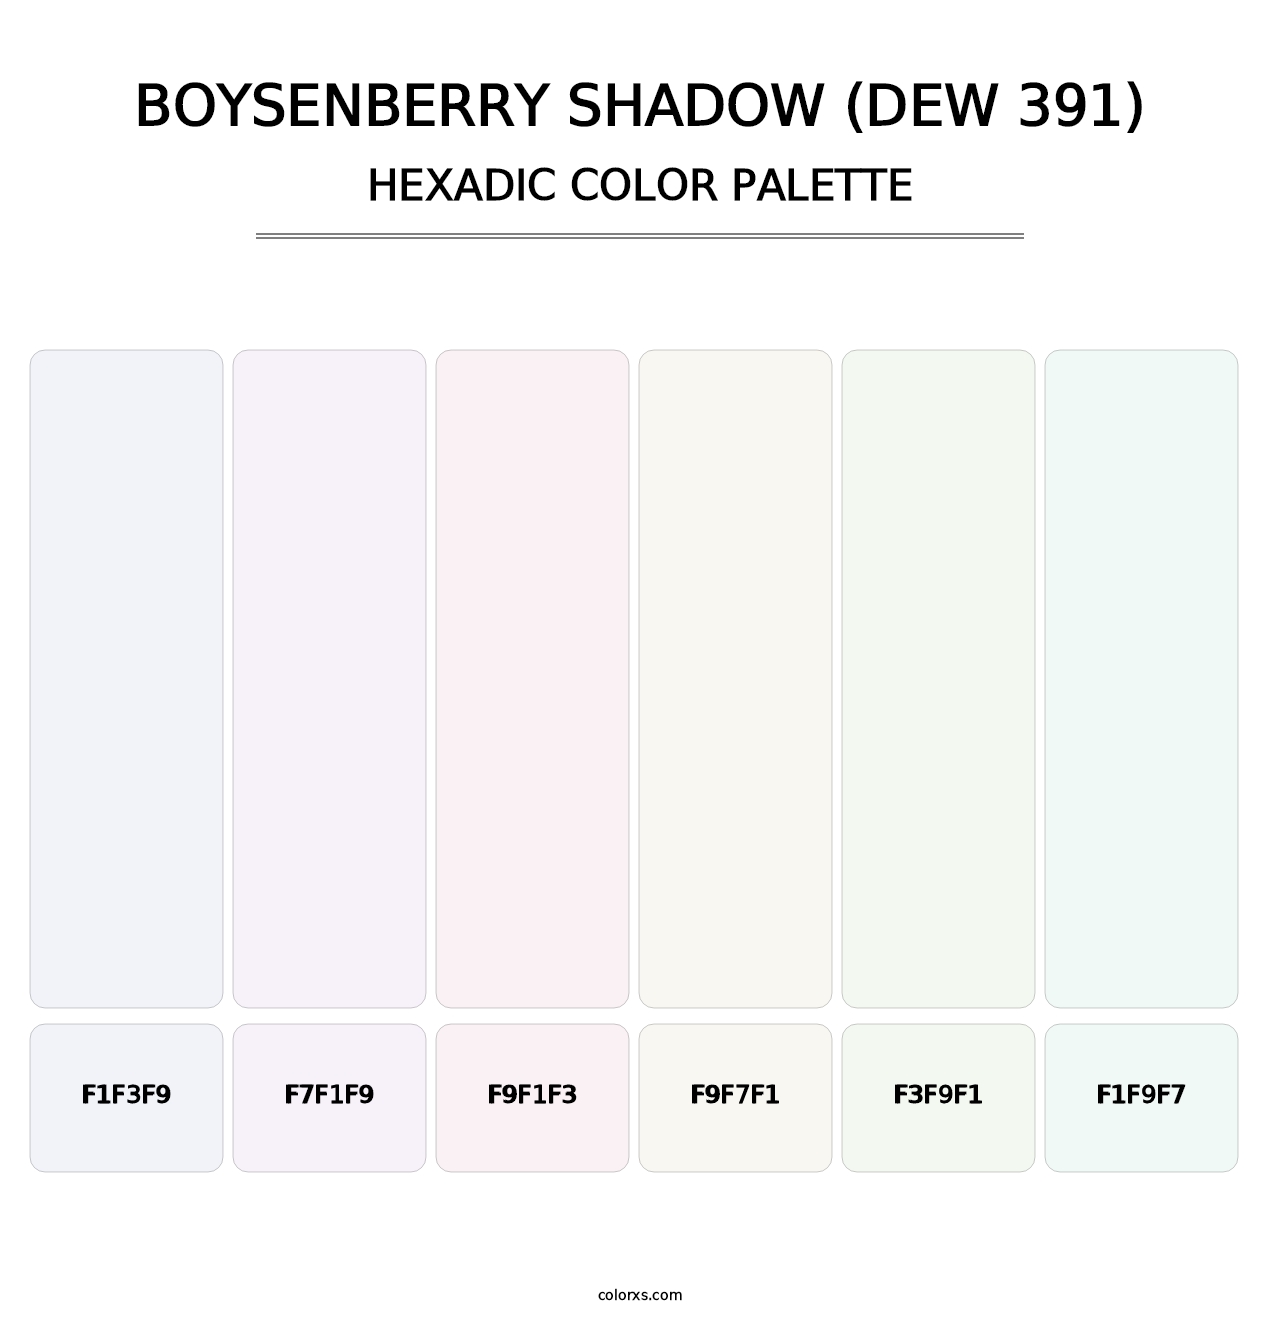 Boysenberry Shadow (DEW 391) - Hexadic Color Palette